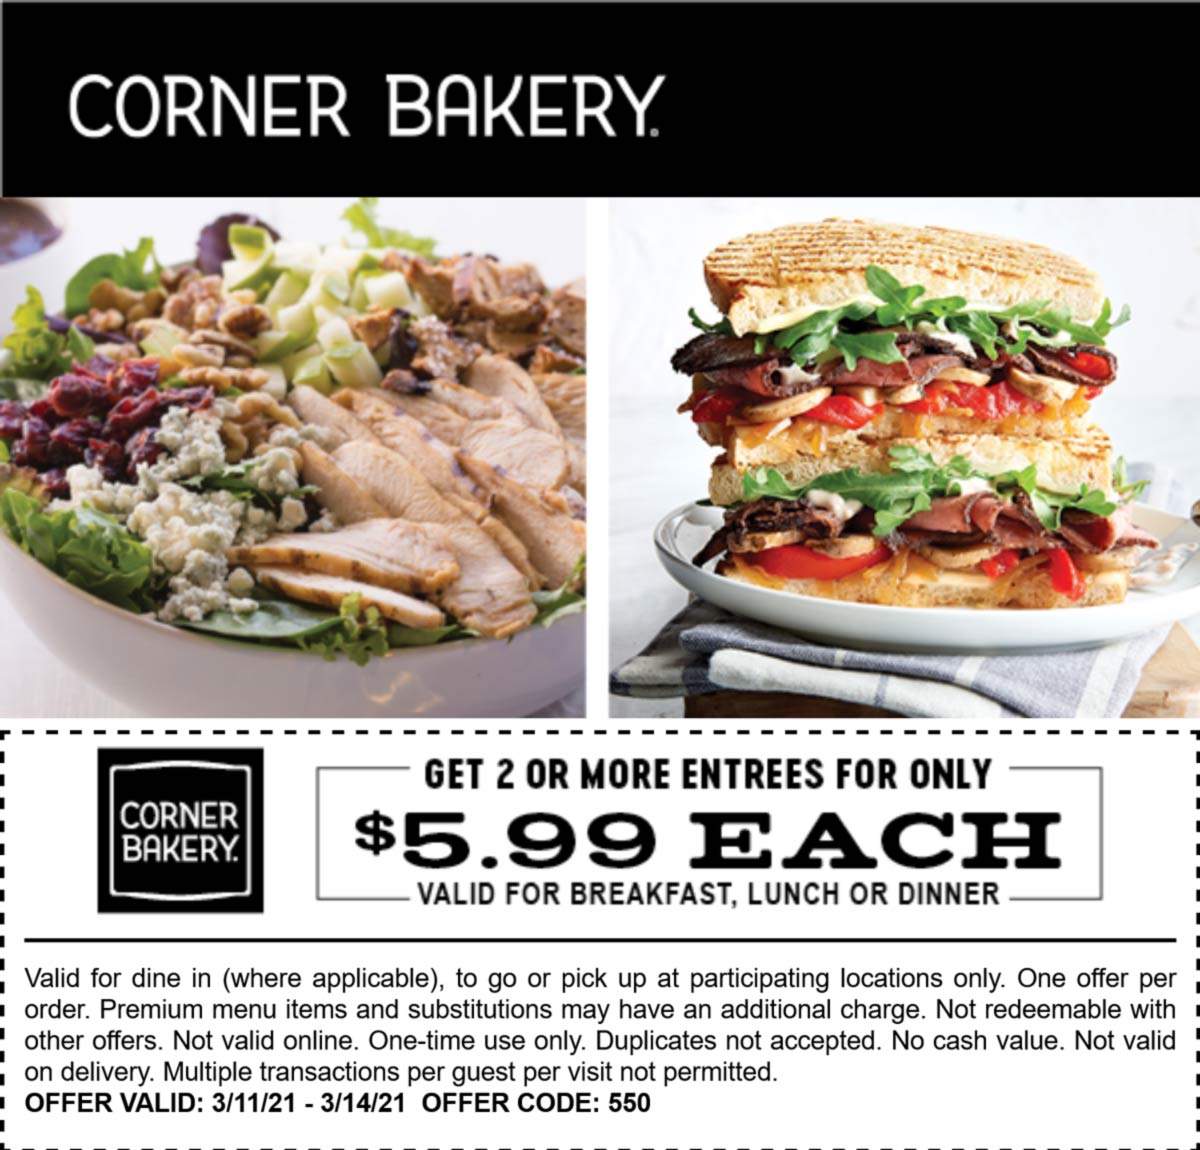 Corner Bakery restaurants Coupon  $6 entrees at Corner Bakery Cafe #cornerbakery 